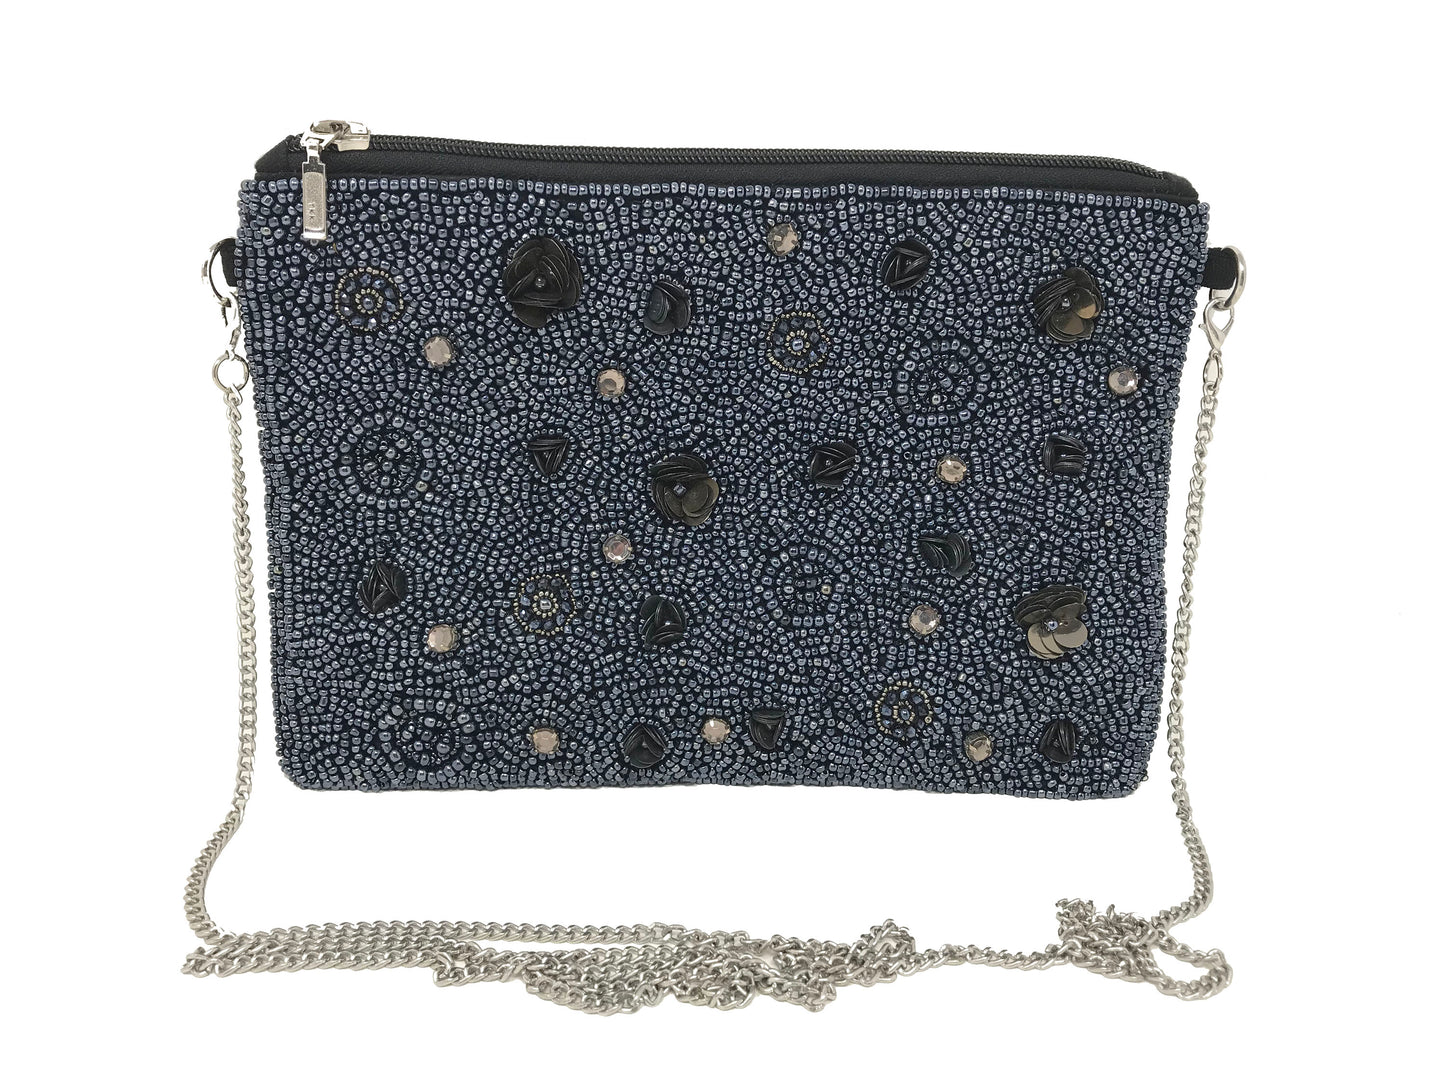 Kay Lee New York Beaded Evening Handbag / Crossbody with Chain Strap...More Styles Inside